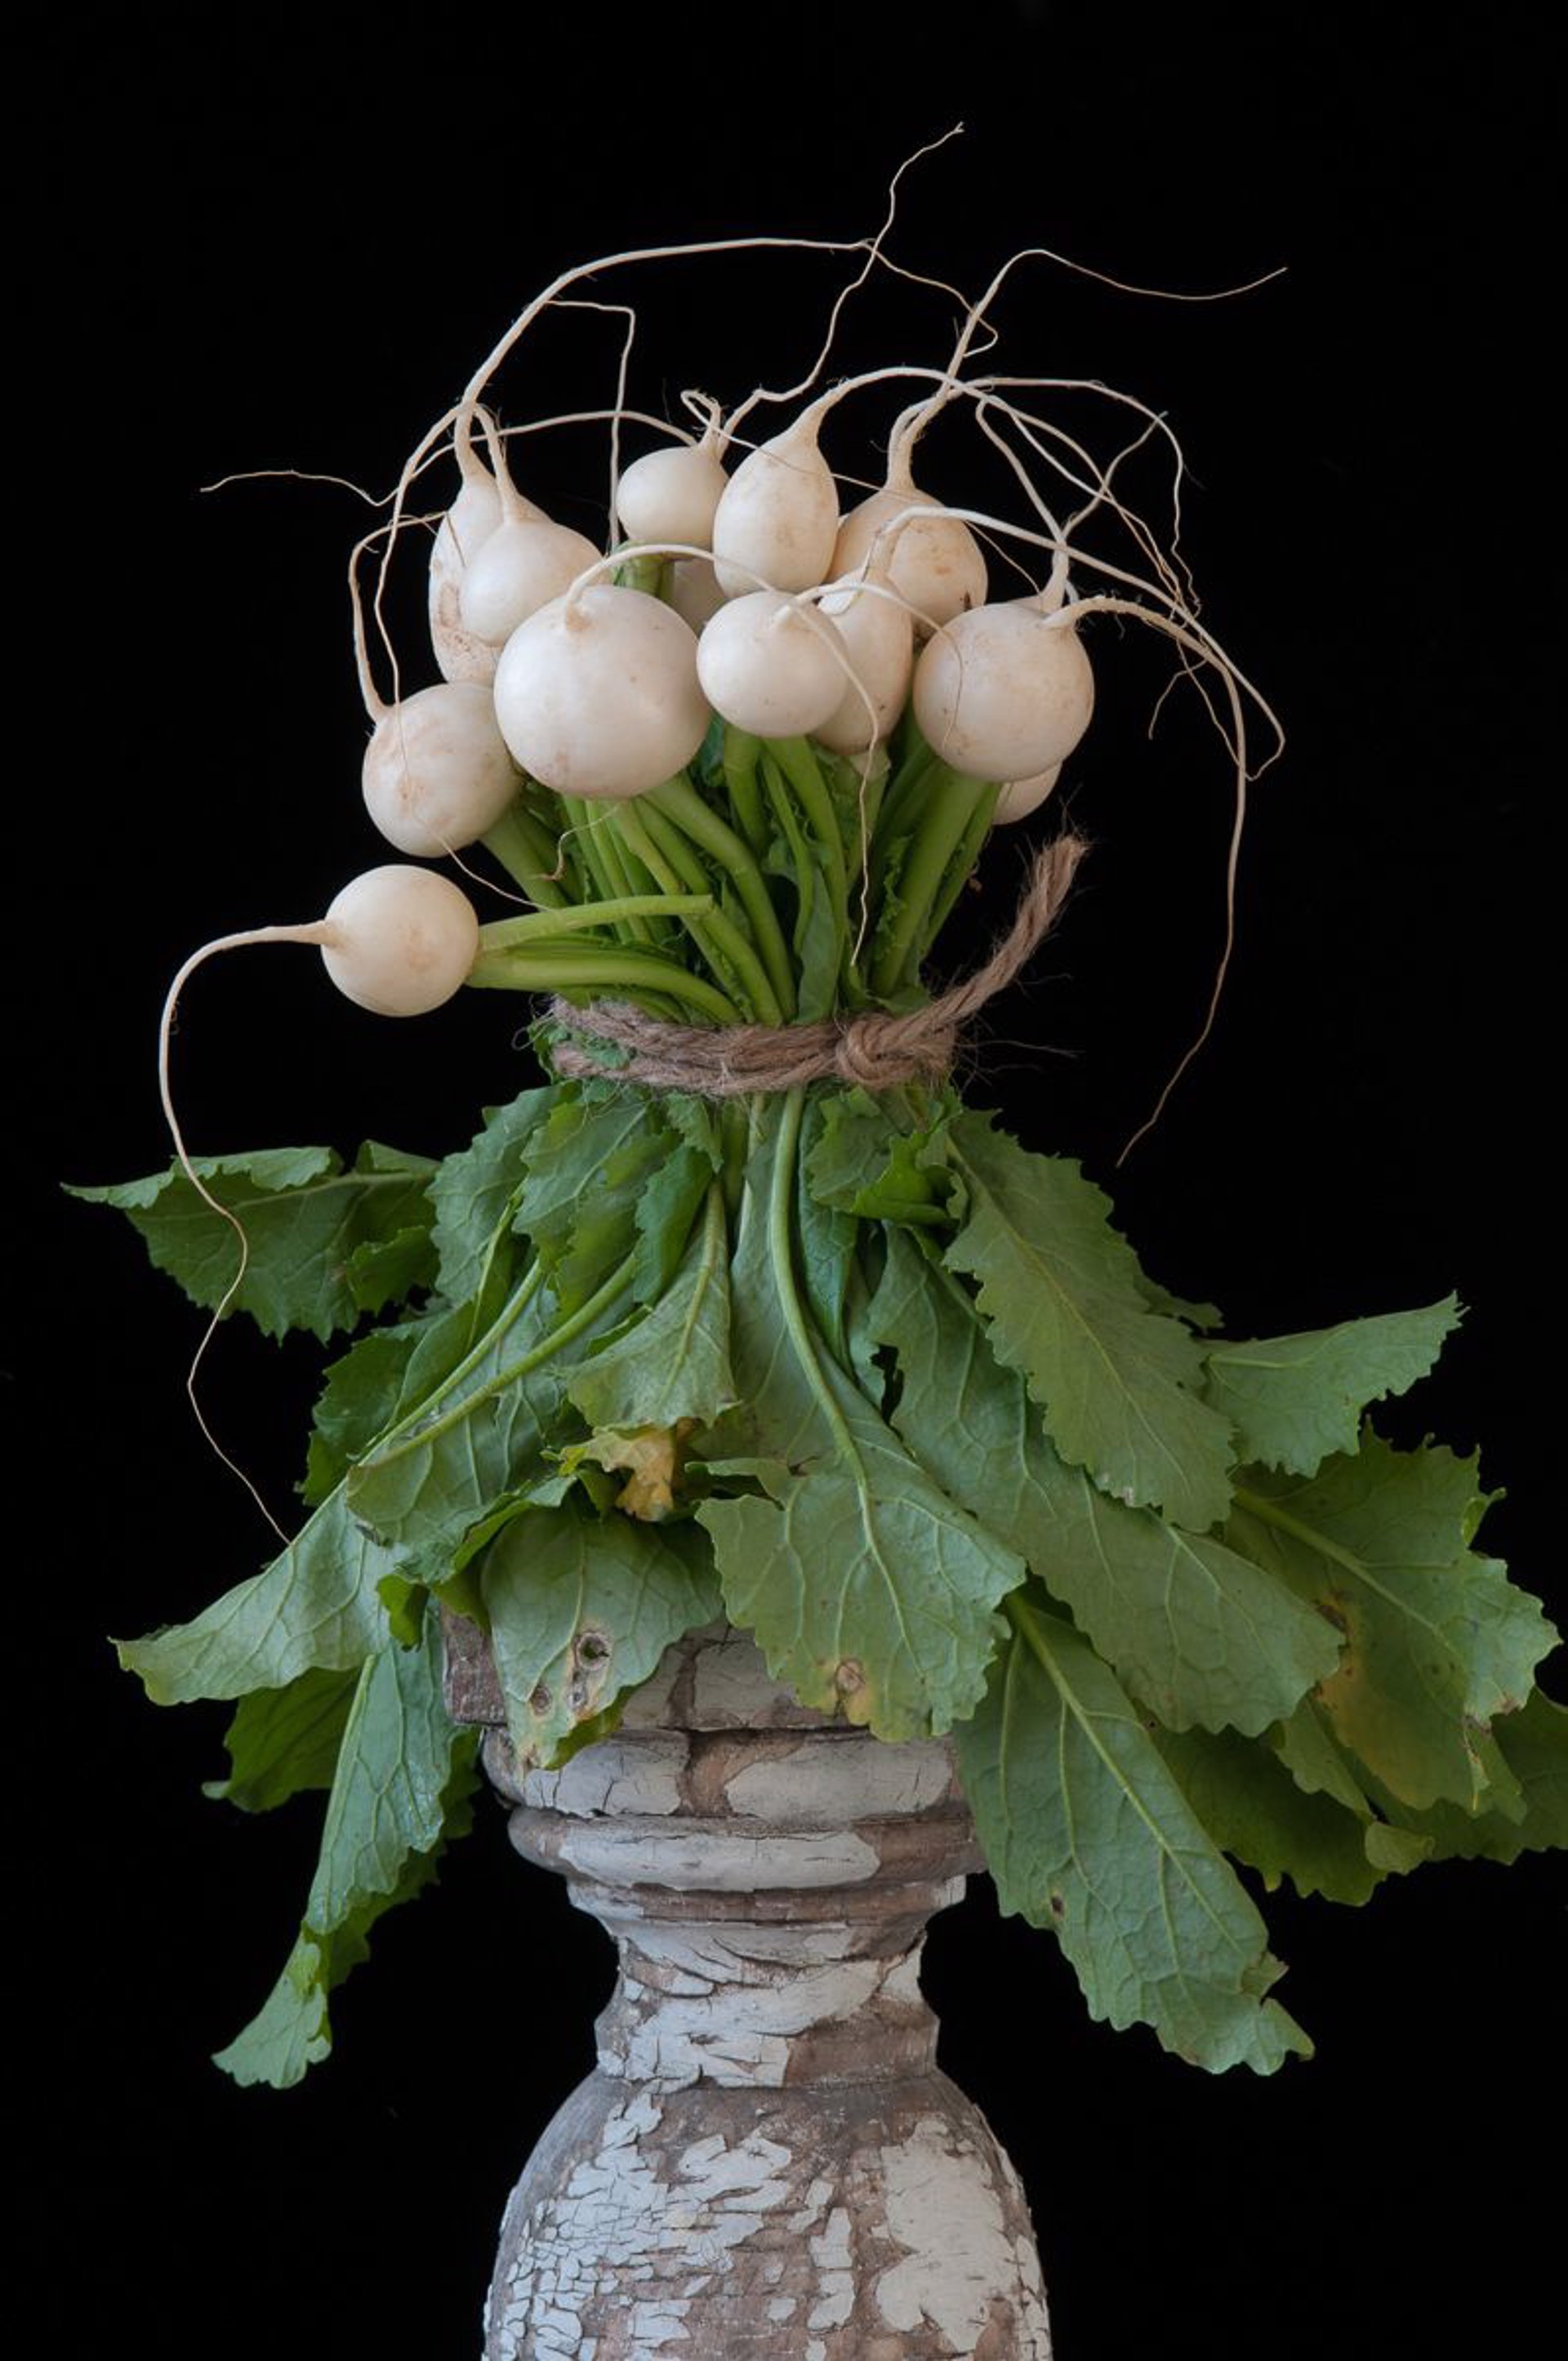 Hakurai Turnips by Lynn Karlin